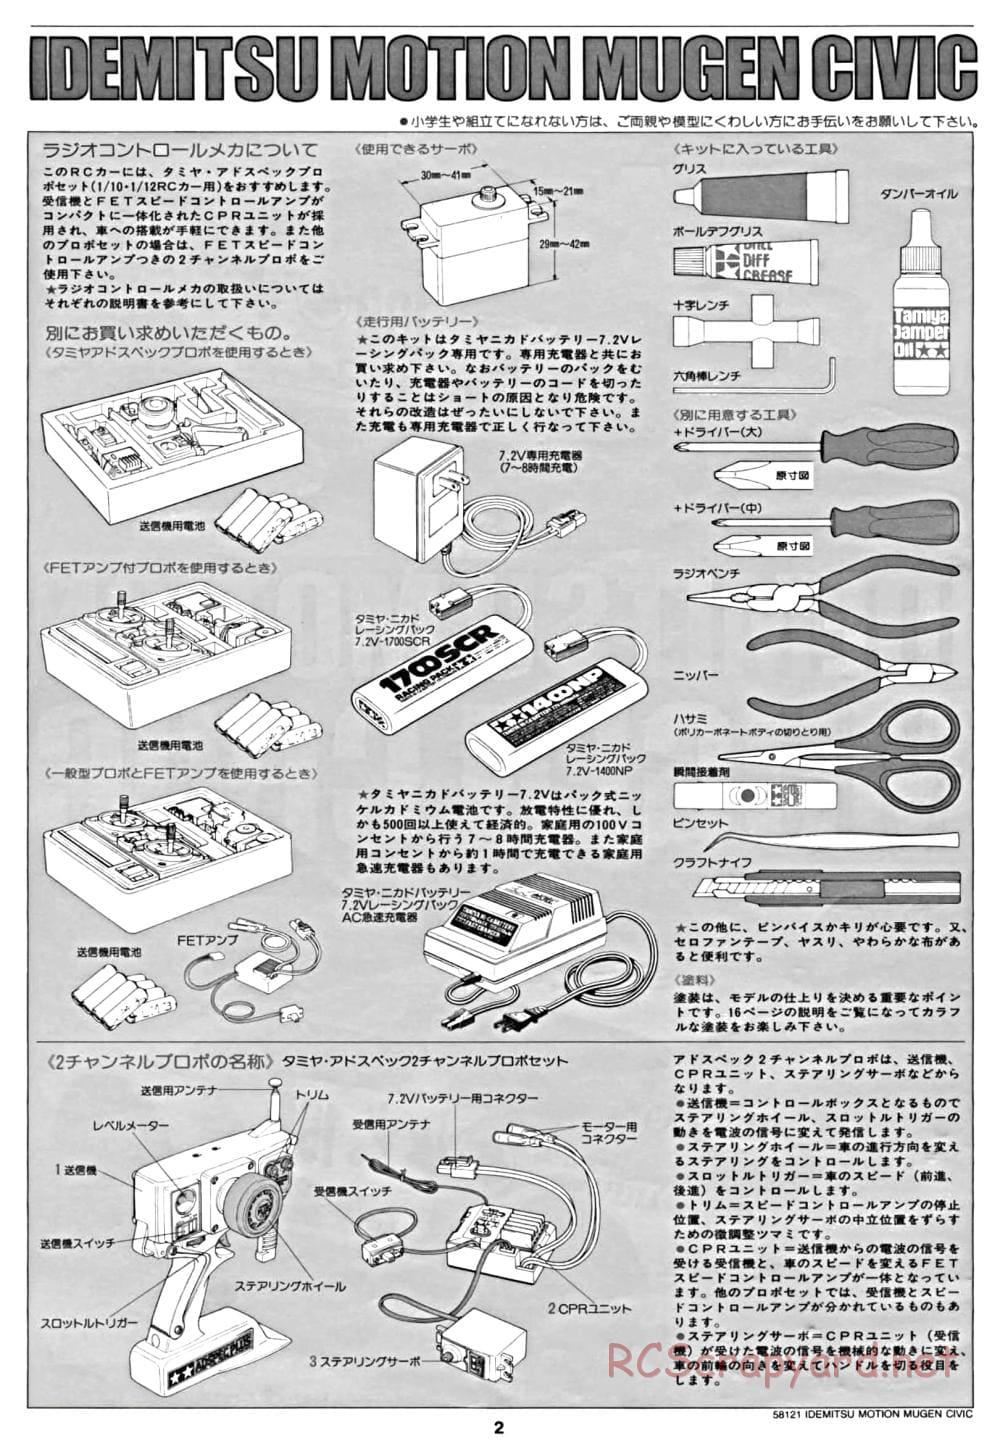 Tamiya - Idemitsu Motion Mugen Civic - FF-01 Chassis - Manual - Page 2